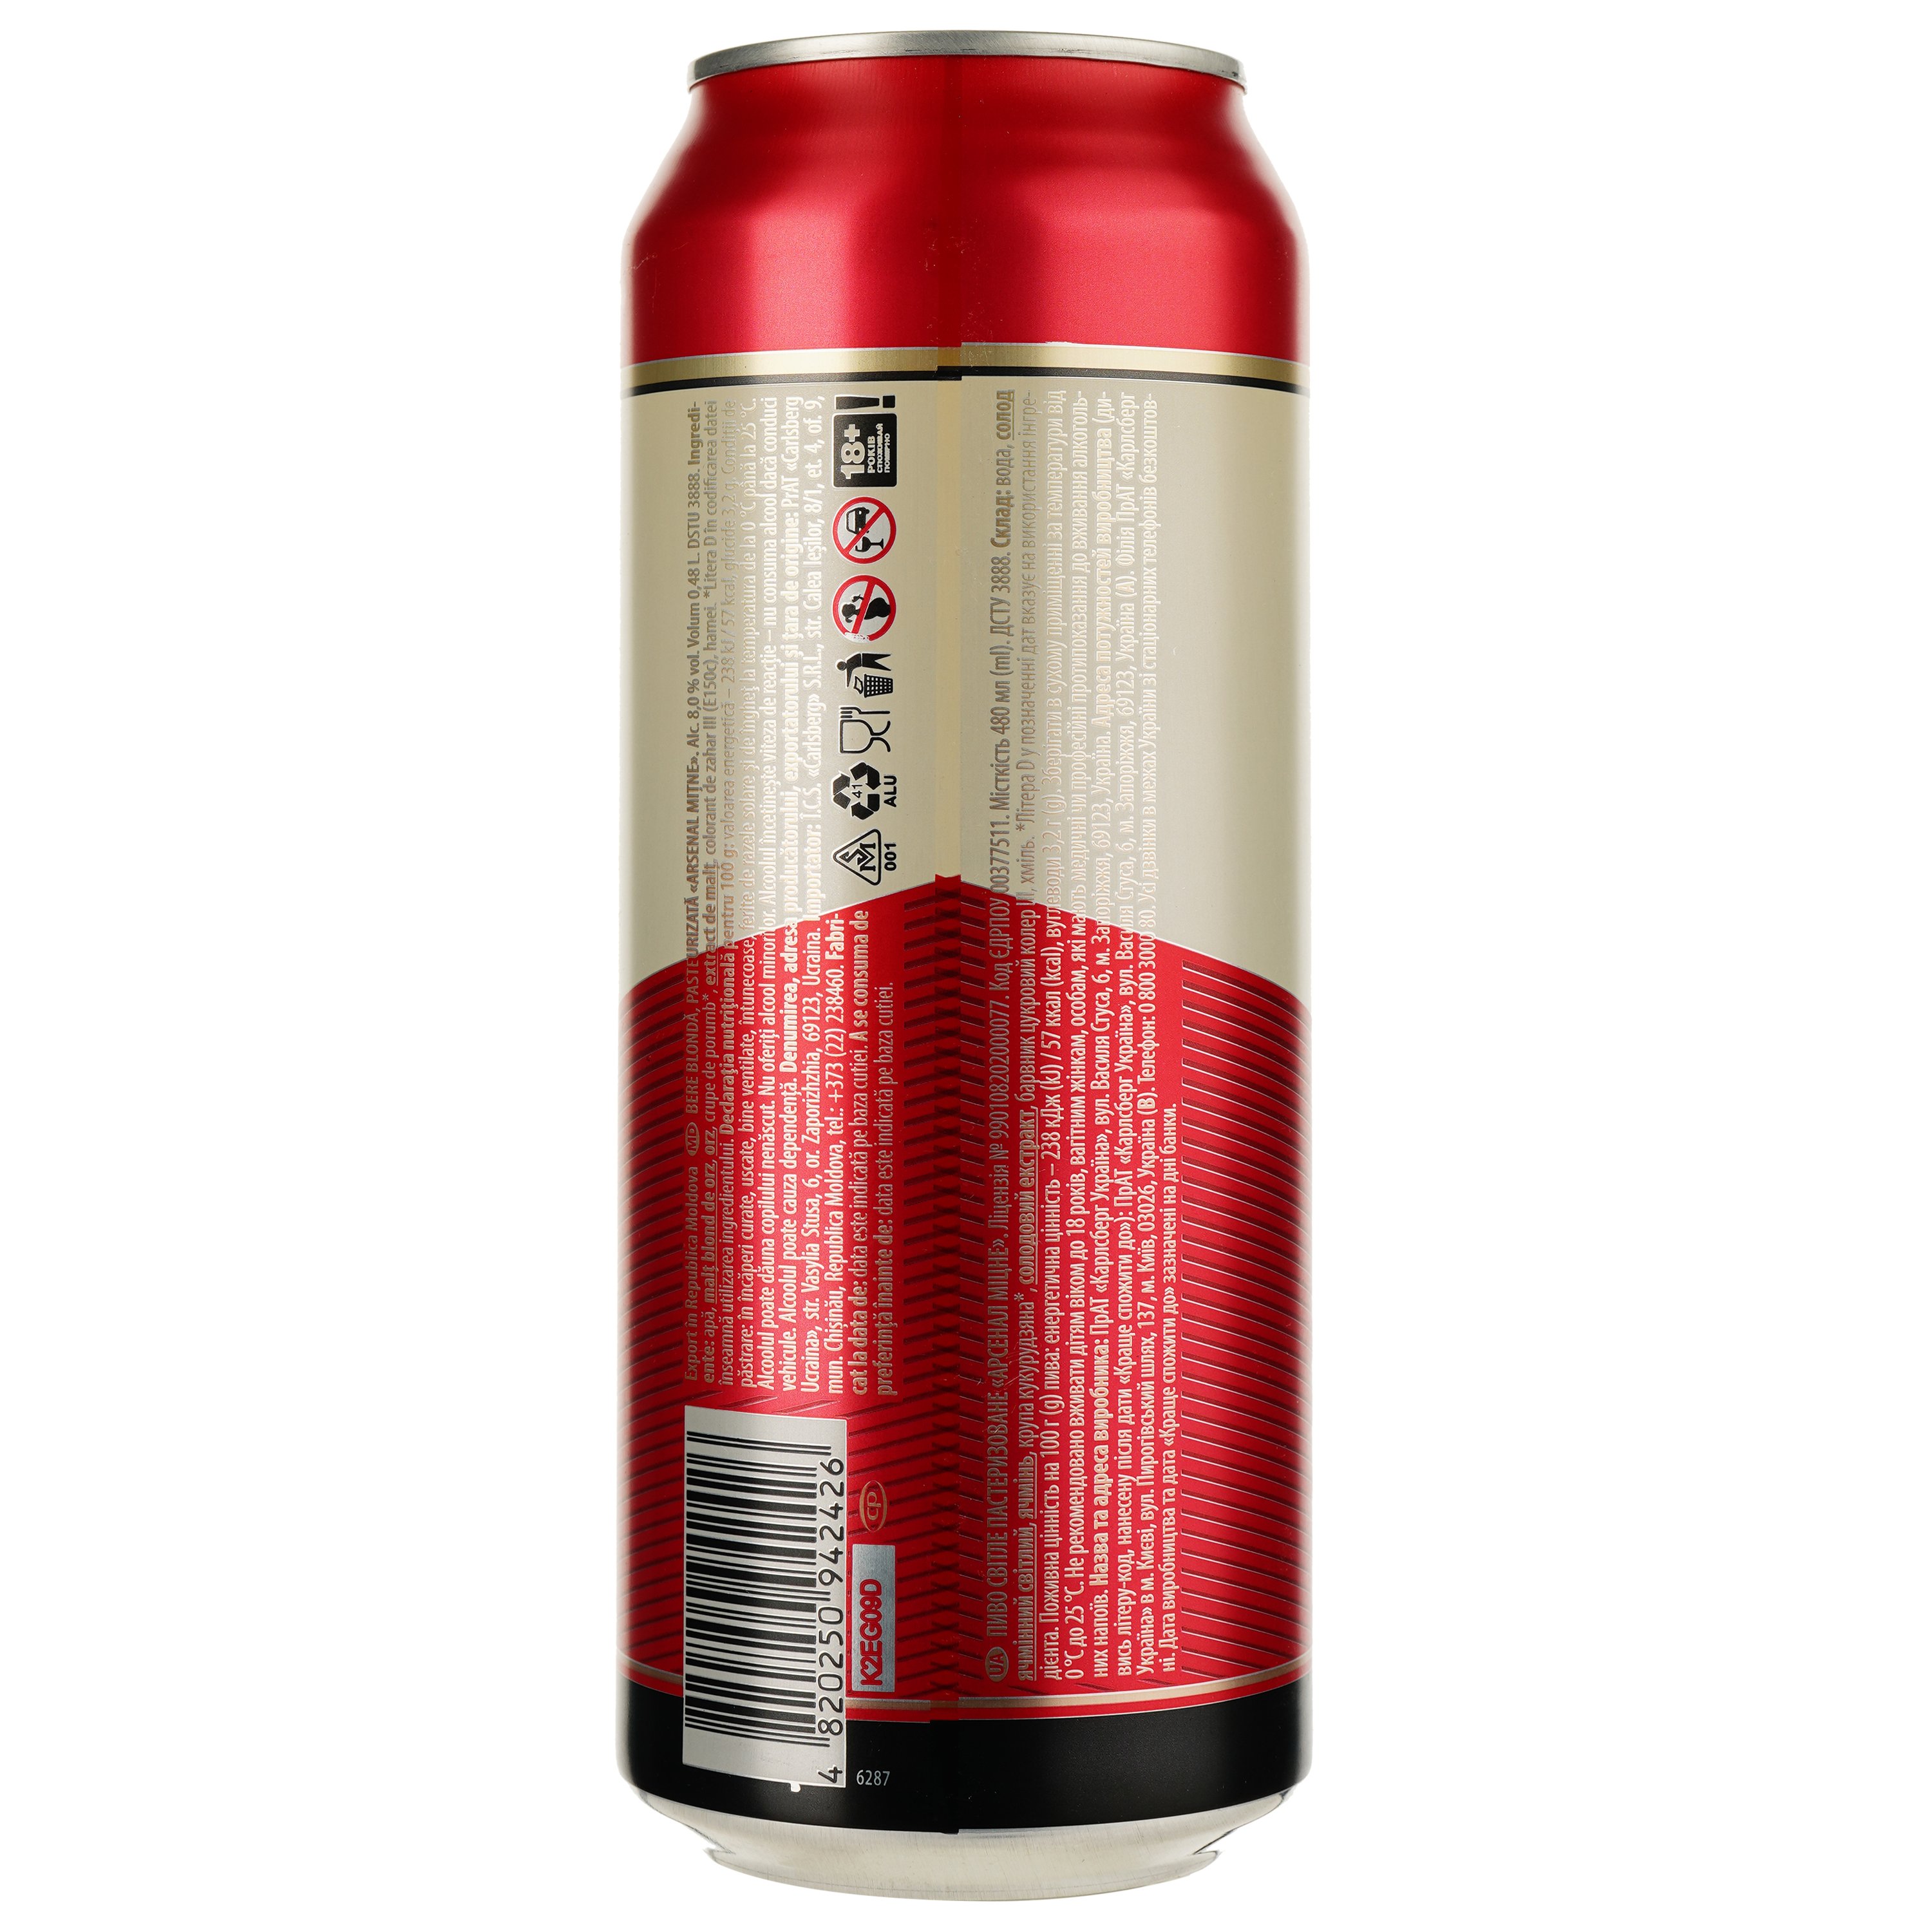 Пиво Арсенал Крепкое, светлое, 8%, ж/б, 0,48 л - фото 2